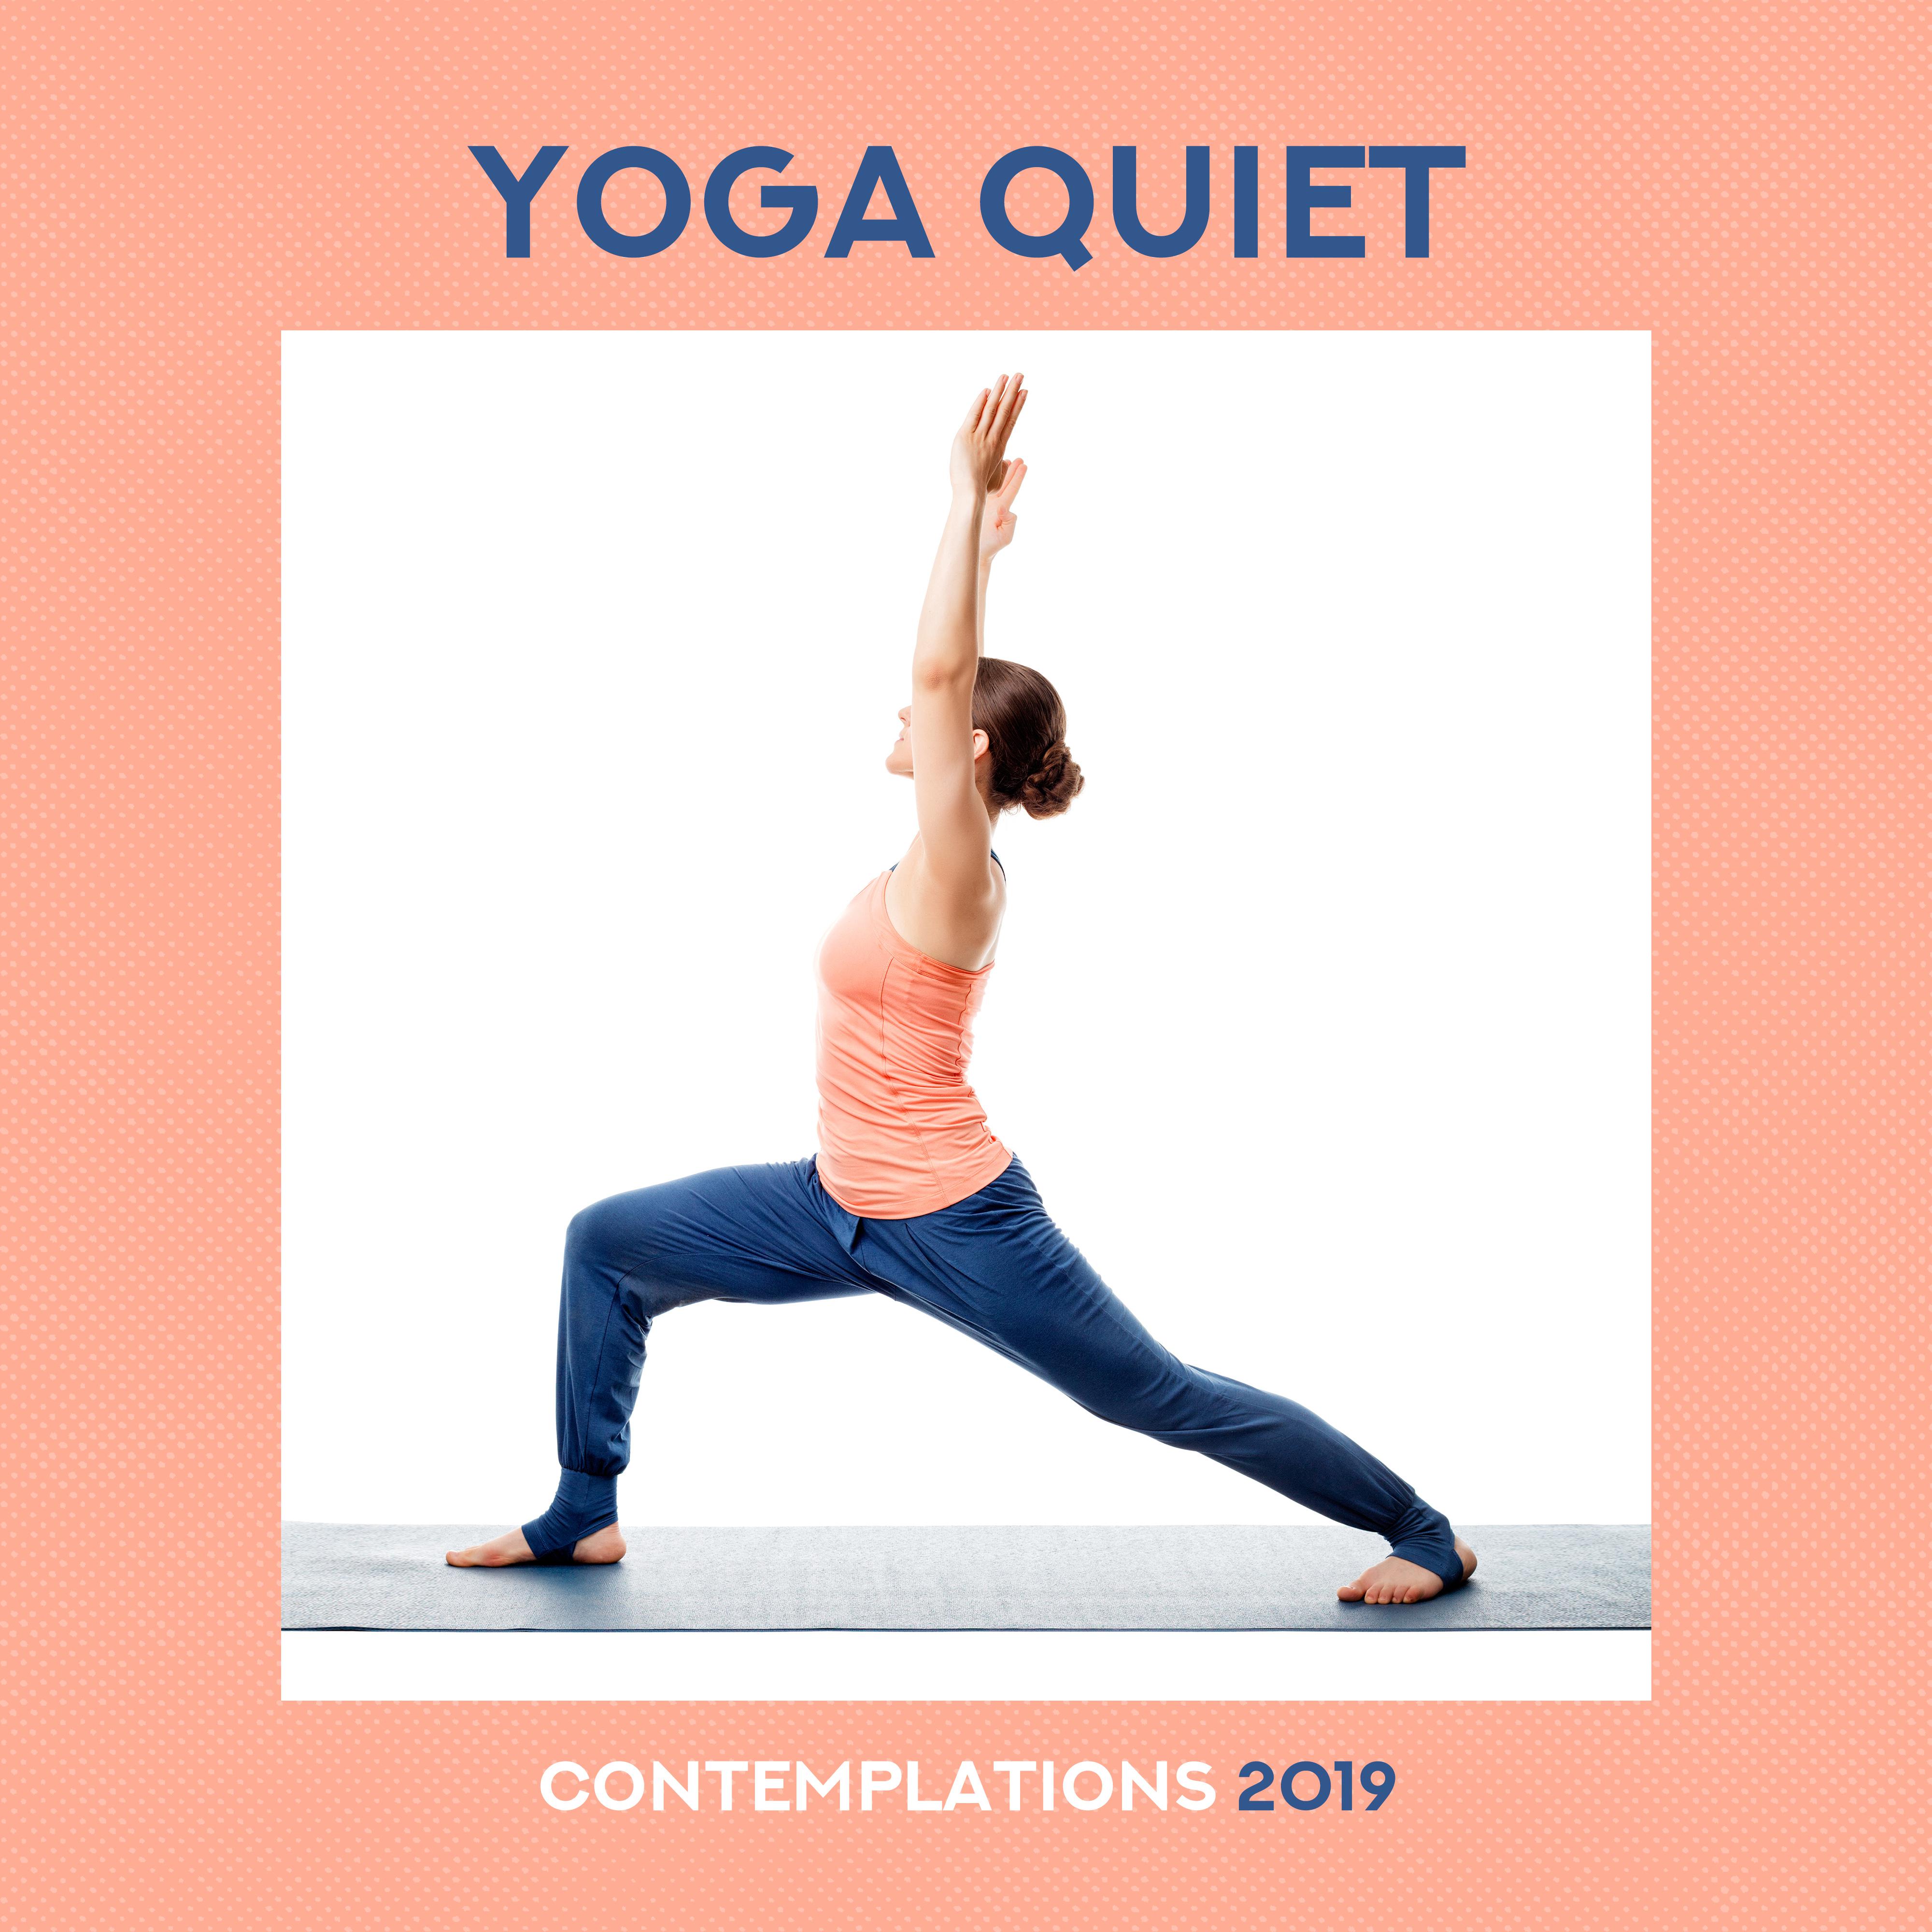 Yoga Quiet Contemplations 2019